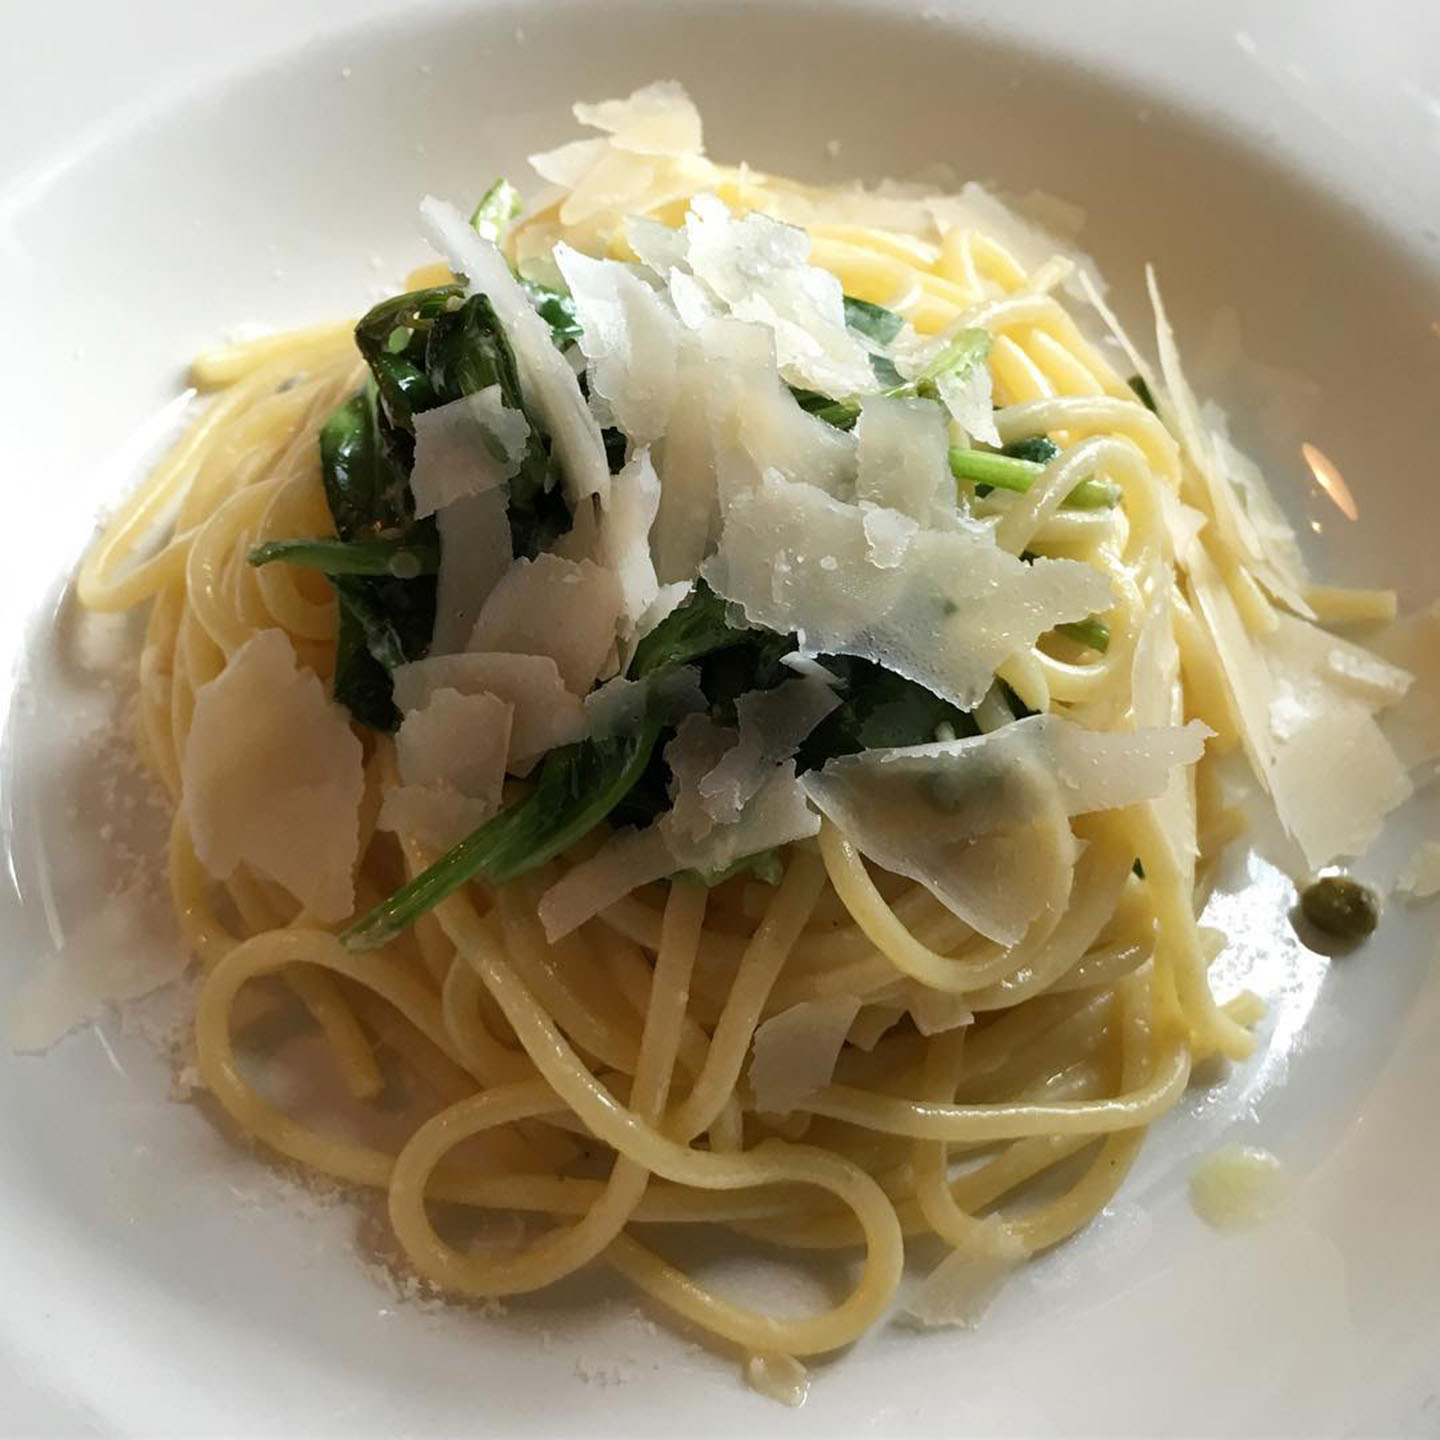 https://www.leoedit.com/wp-content/uploads/2021/03/Terronis-Spaghetti-al-limone-header.jpg